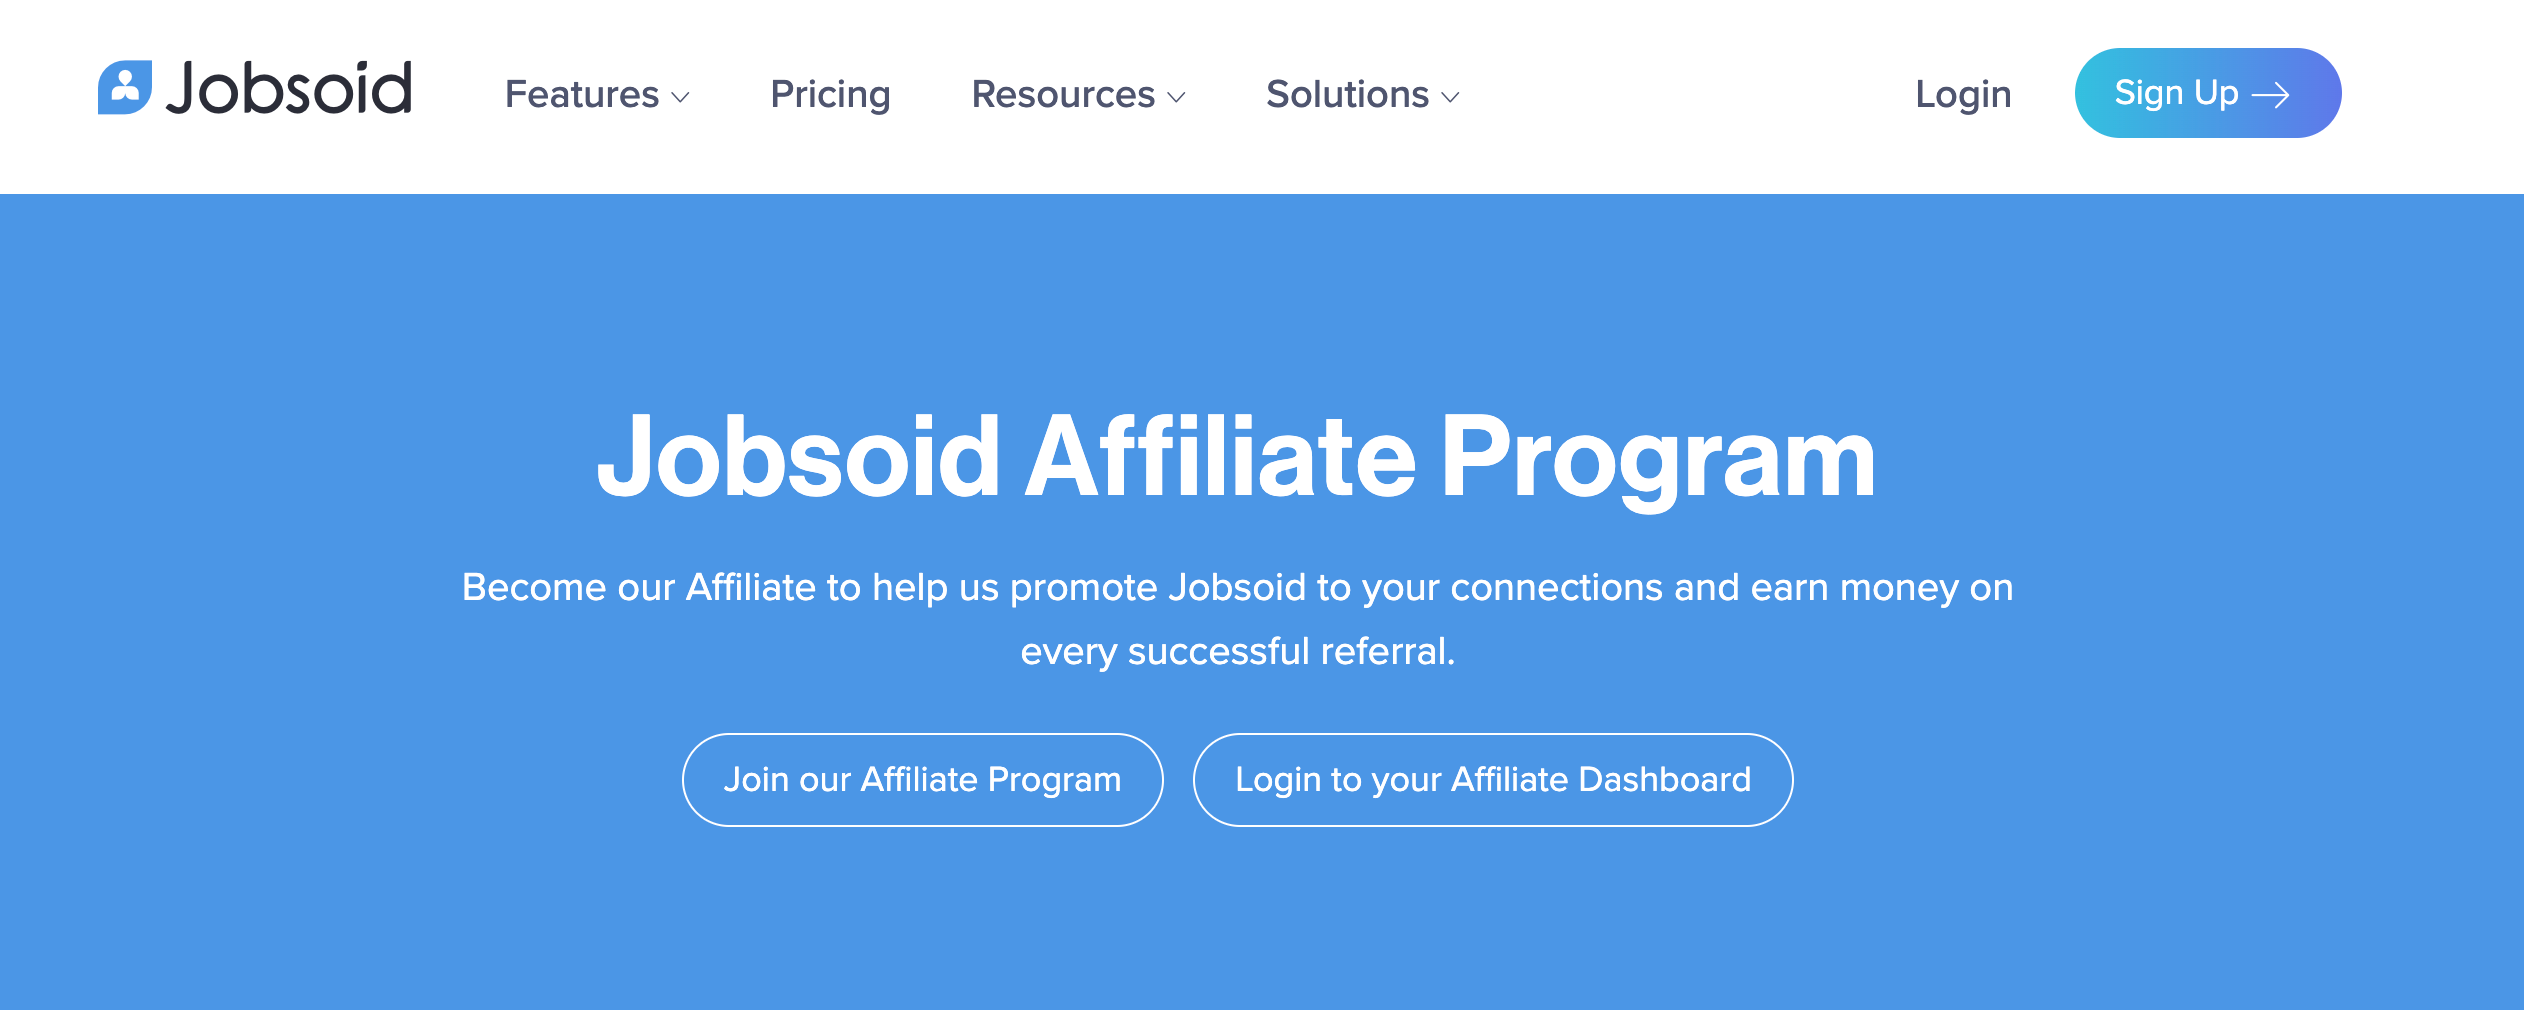 jobsoid affiliate program